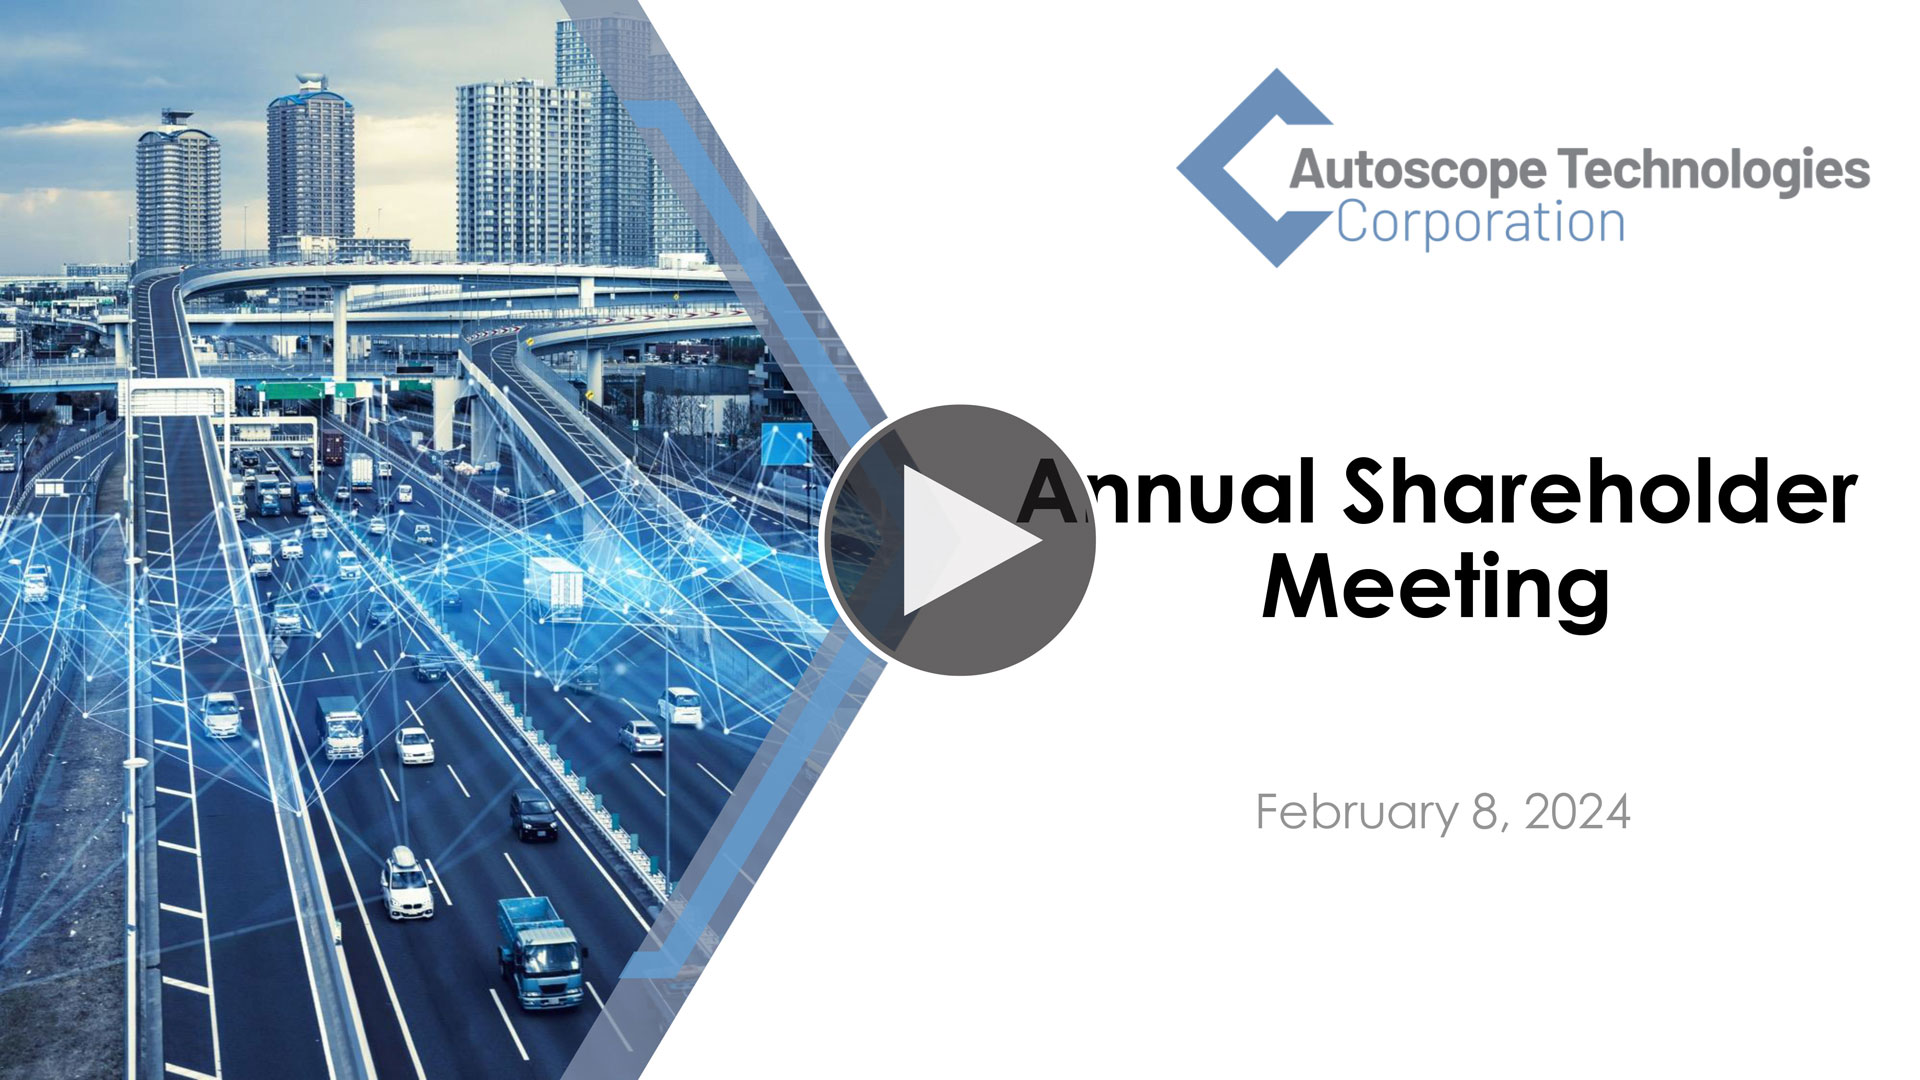 Autoscope Technologies Corp Annual Shareholder Meeting